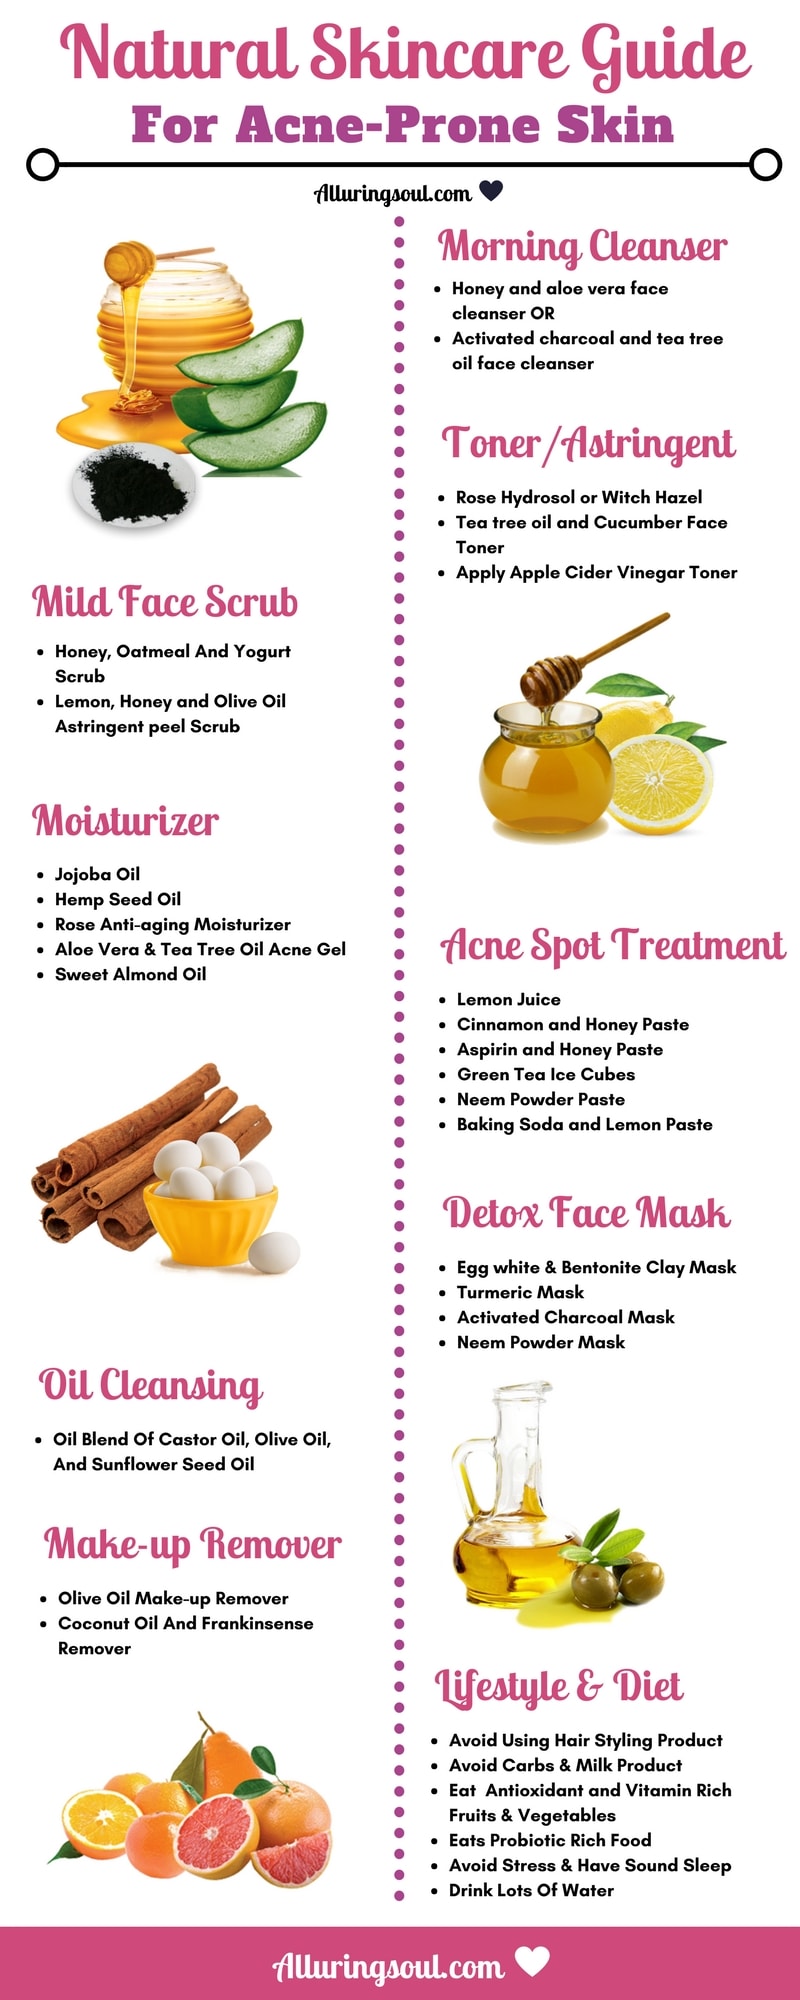 natural skin care guide for acne-prone skin